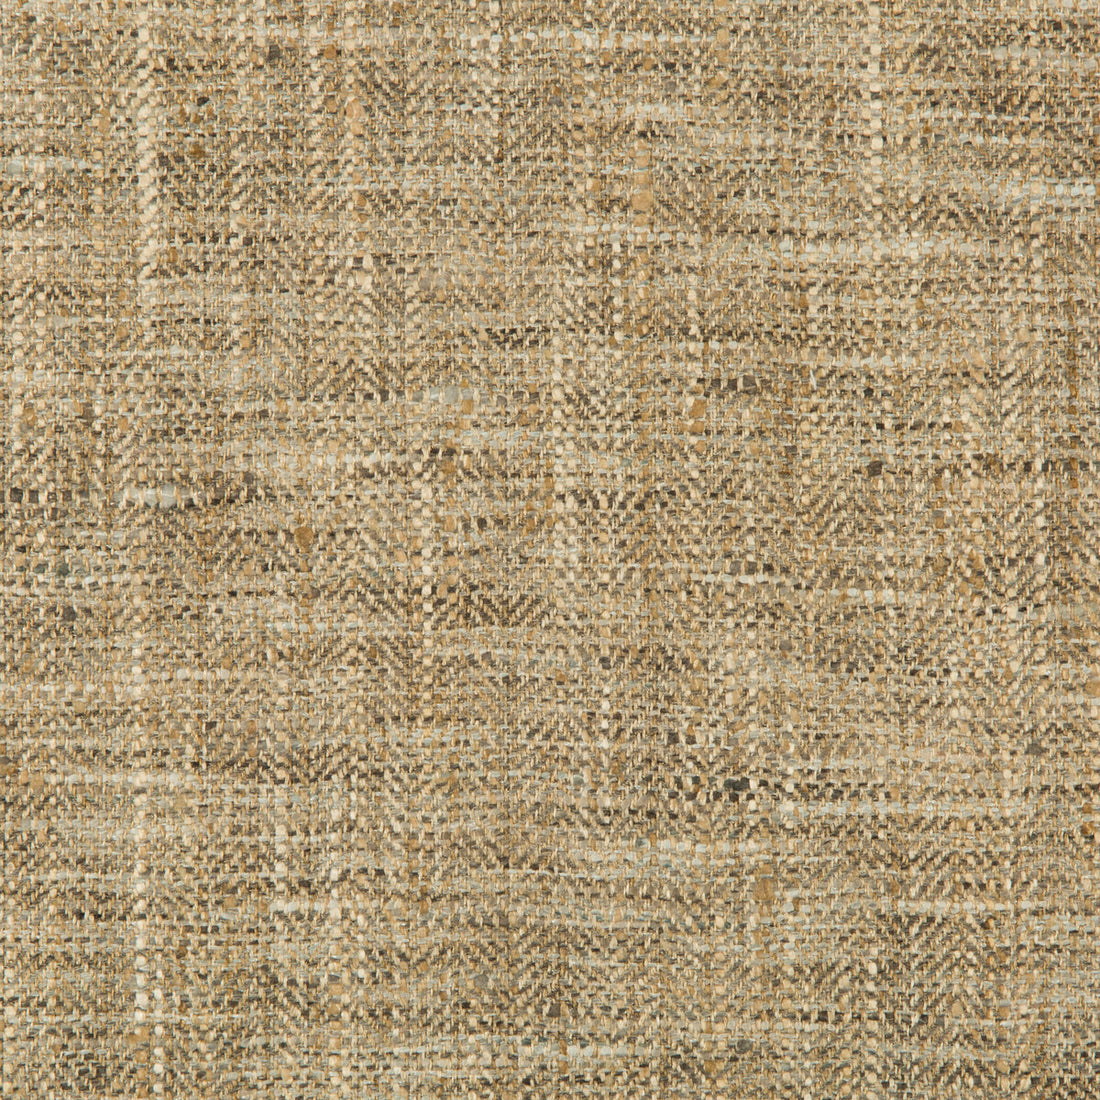 Kravet Smart fabric in 34088-1616 color - pattern 34088.1616.0 - by Kravet Smart